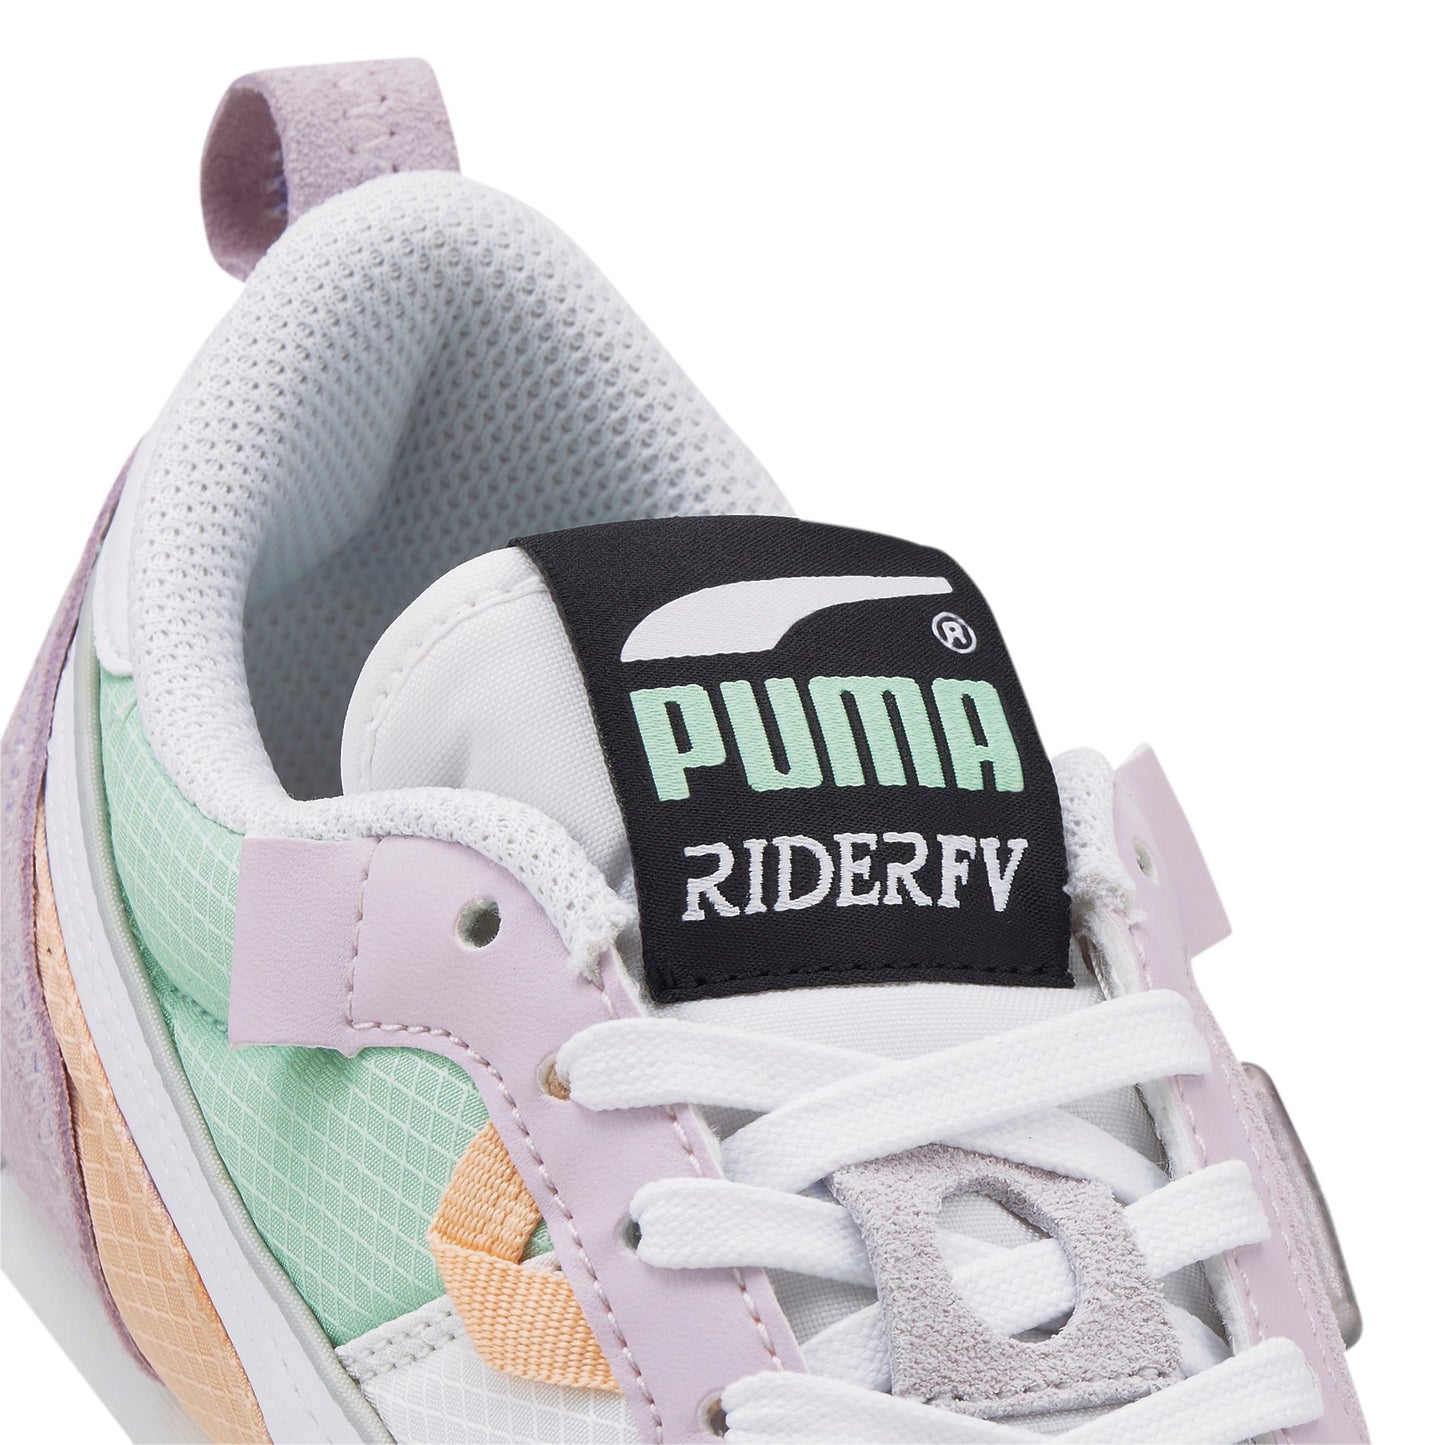 PUMA RIDER FV "FUTURE VINATGE" - Puma White-Lavender Fog